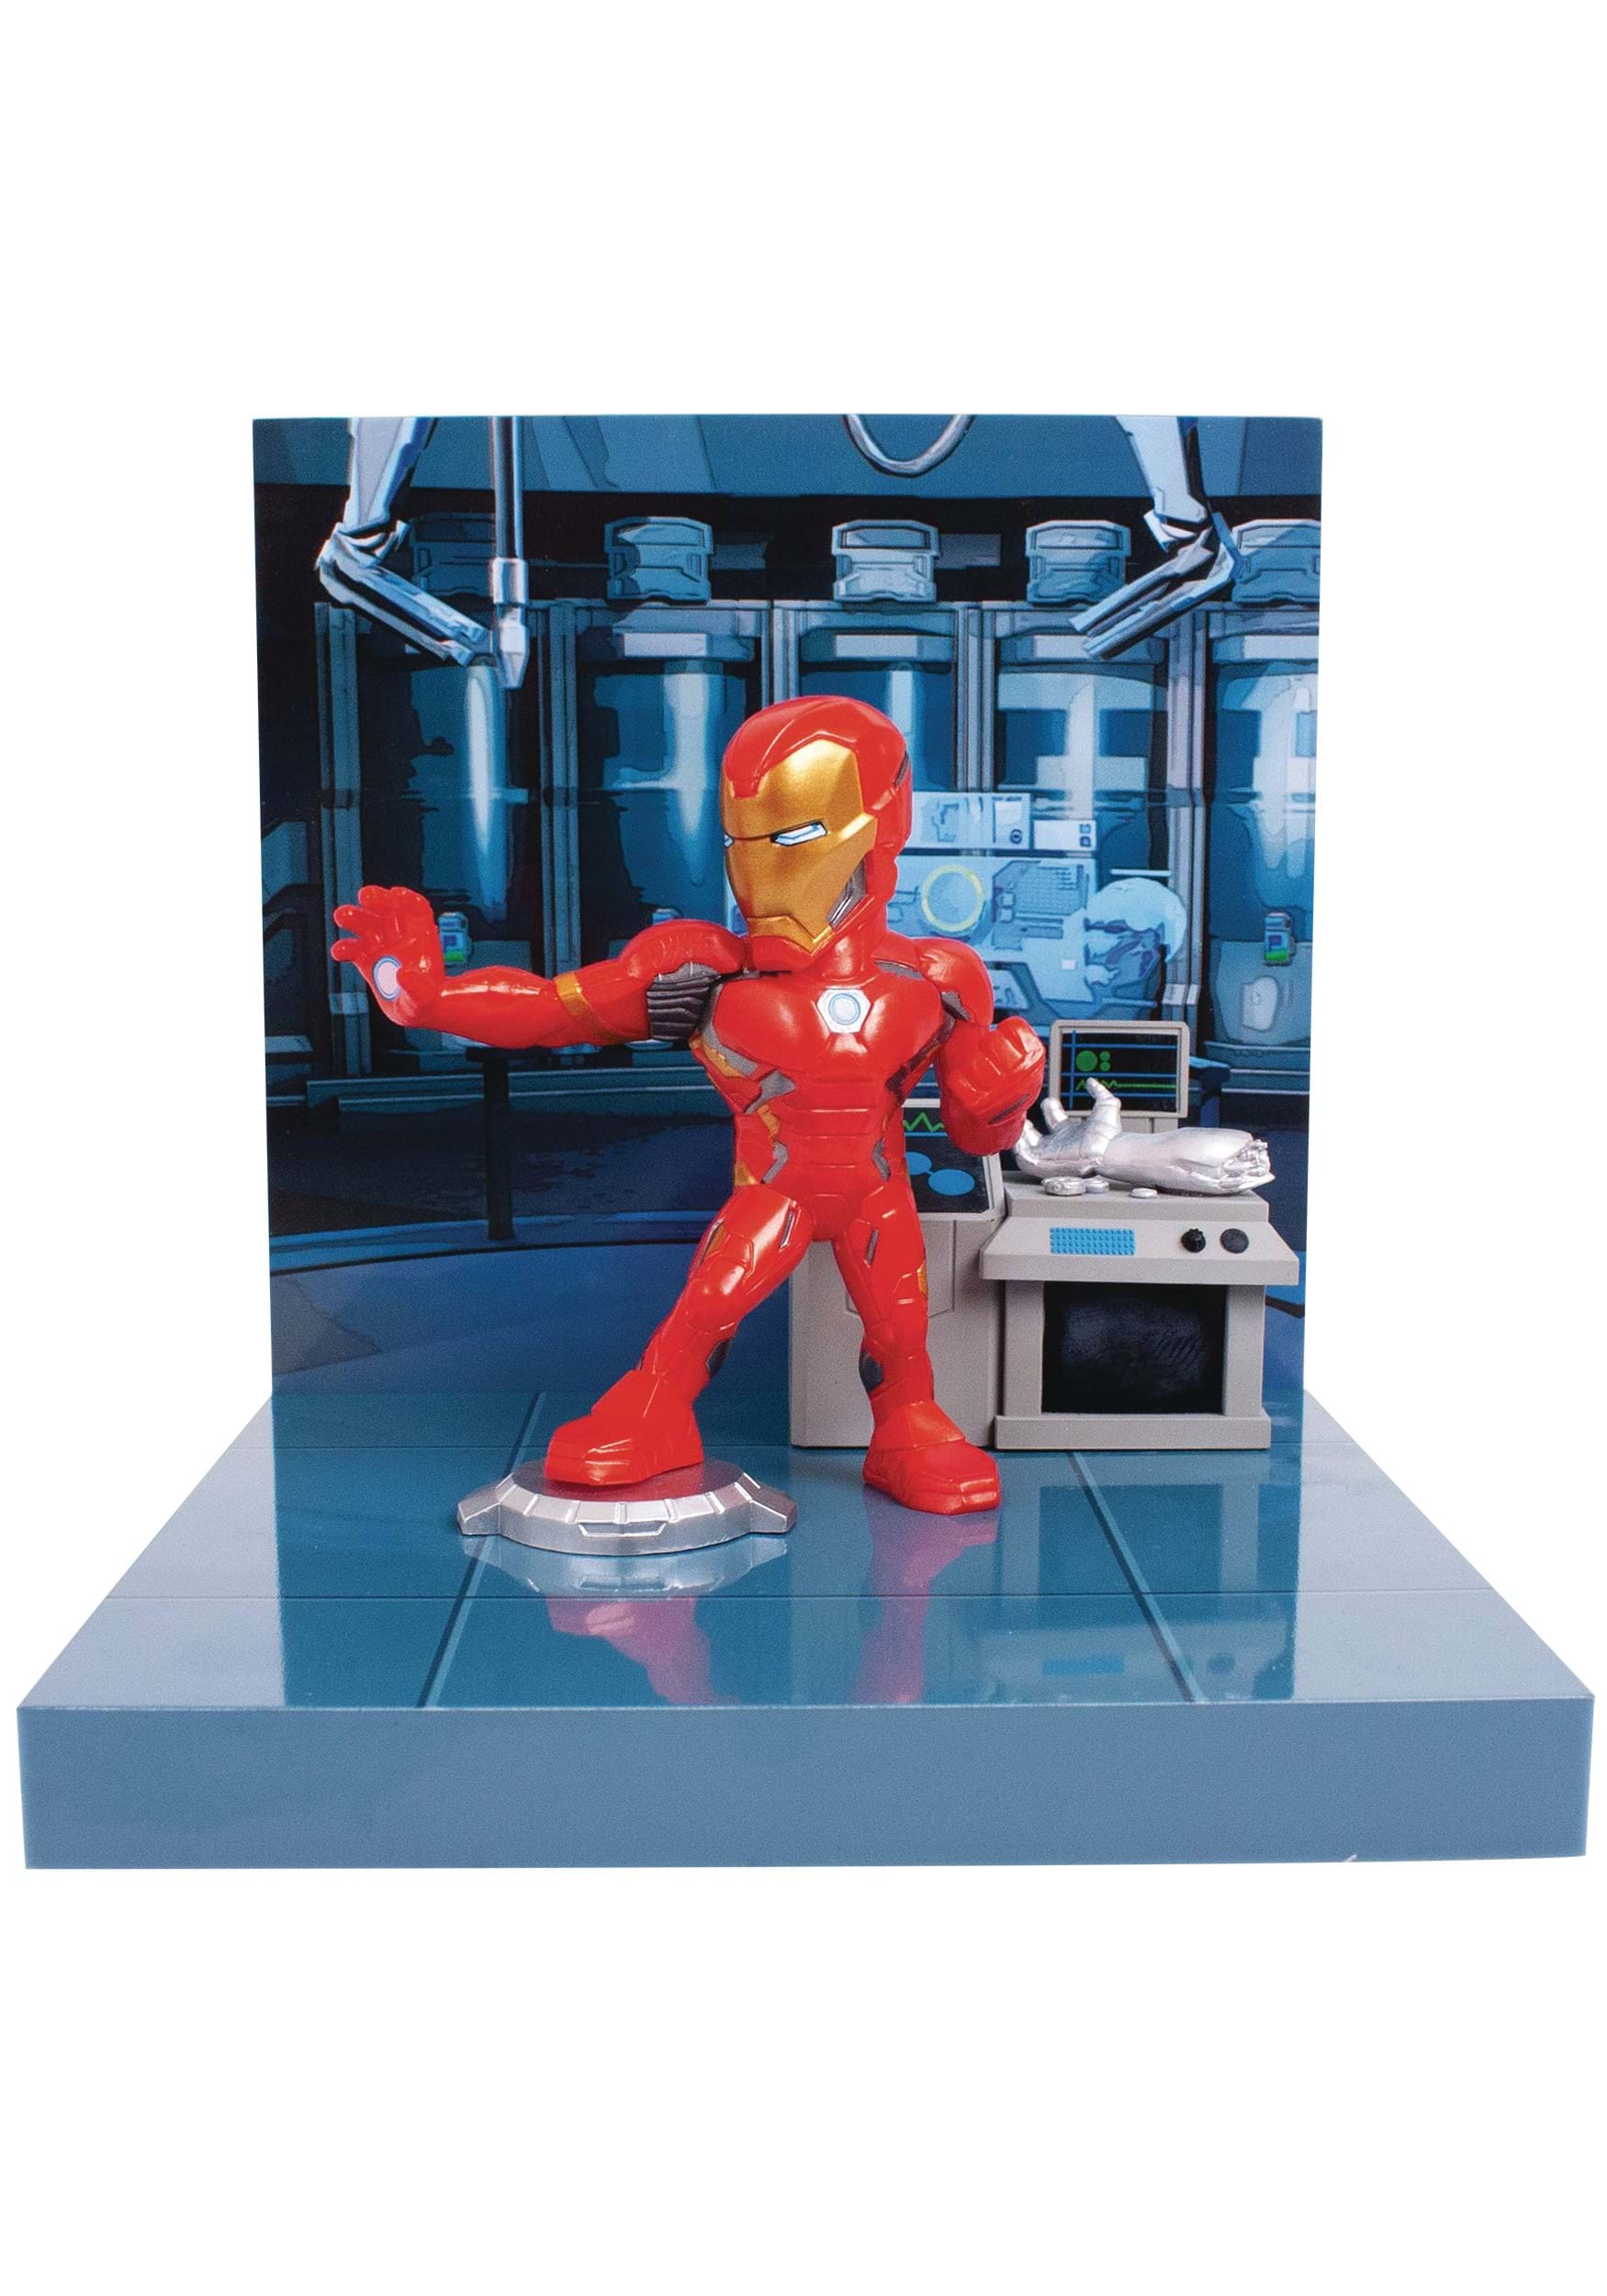 The Loyal Subjects Superama Iron Man Marvel Diorama